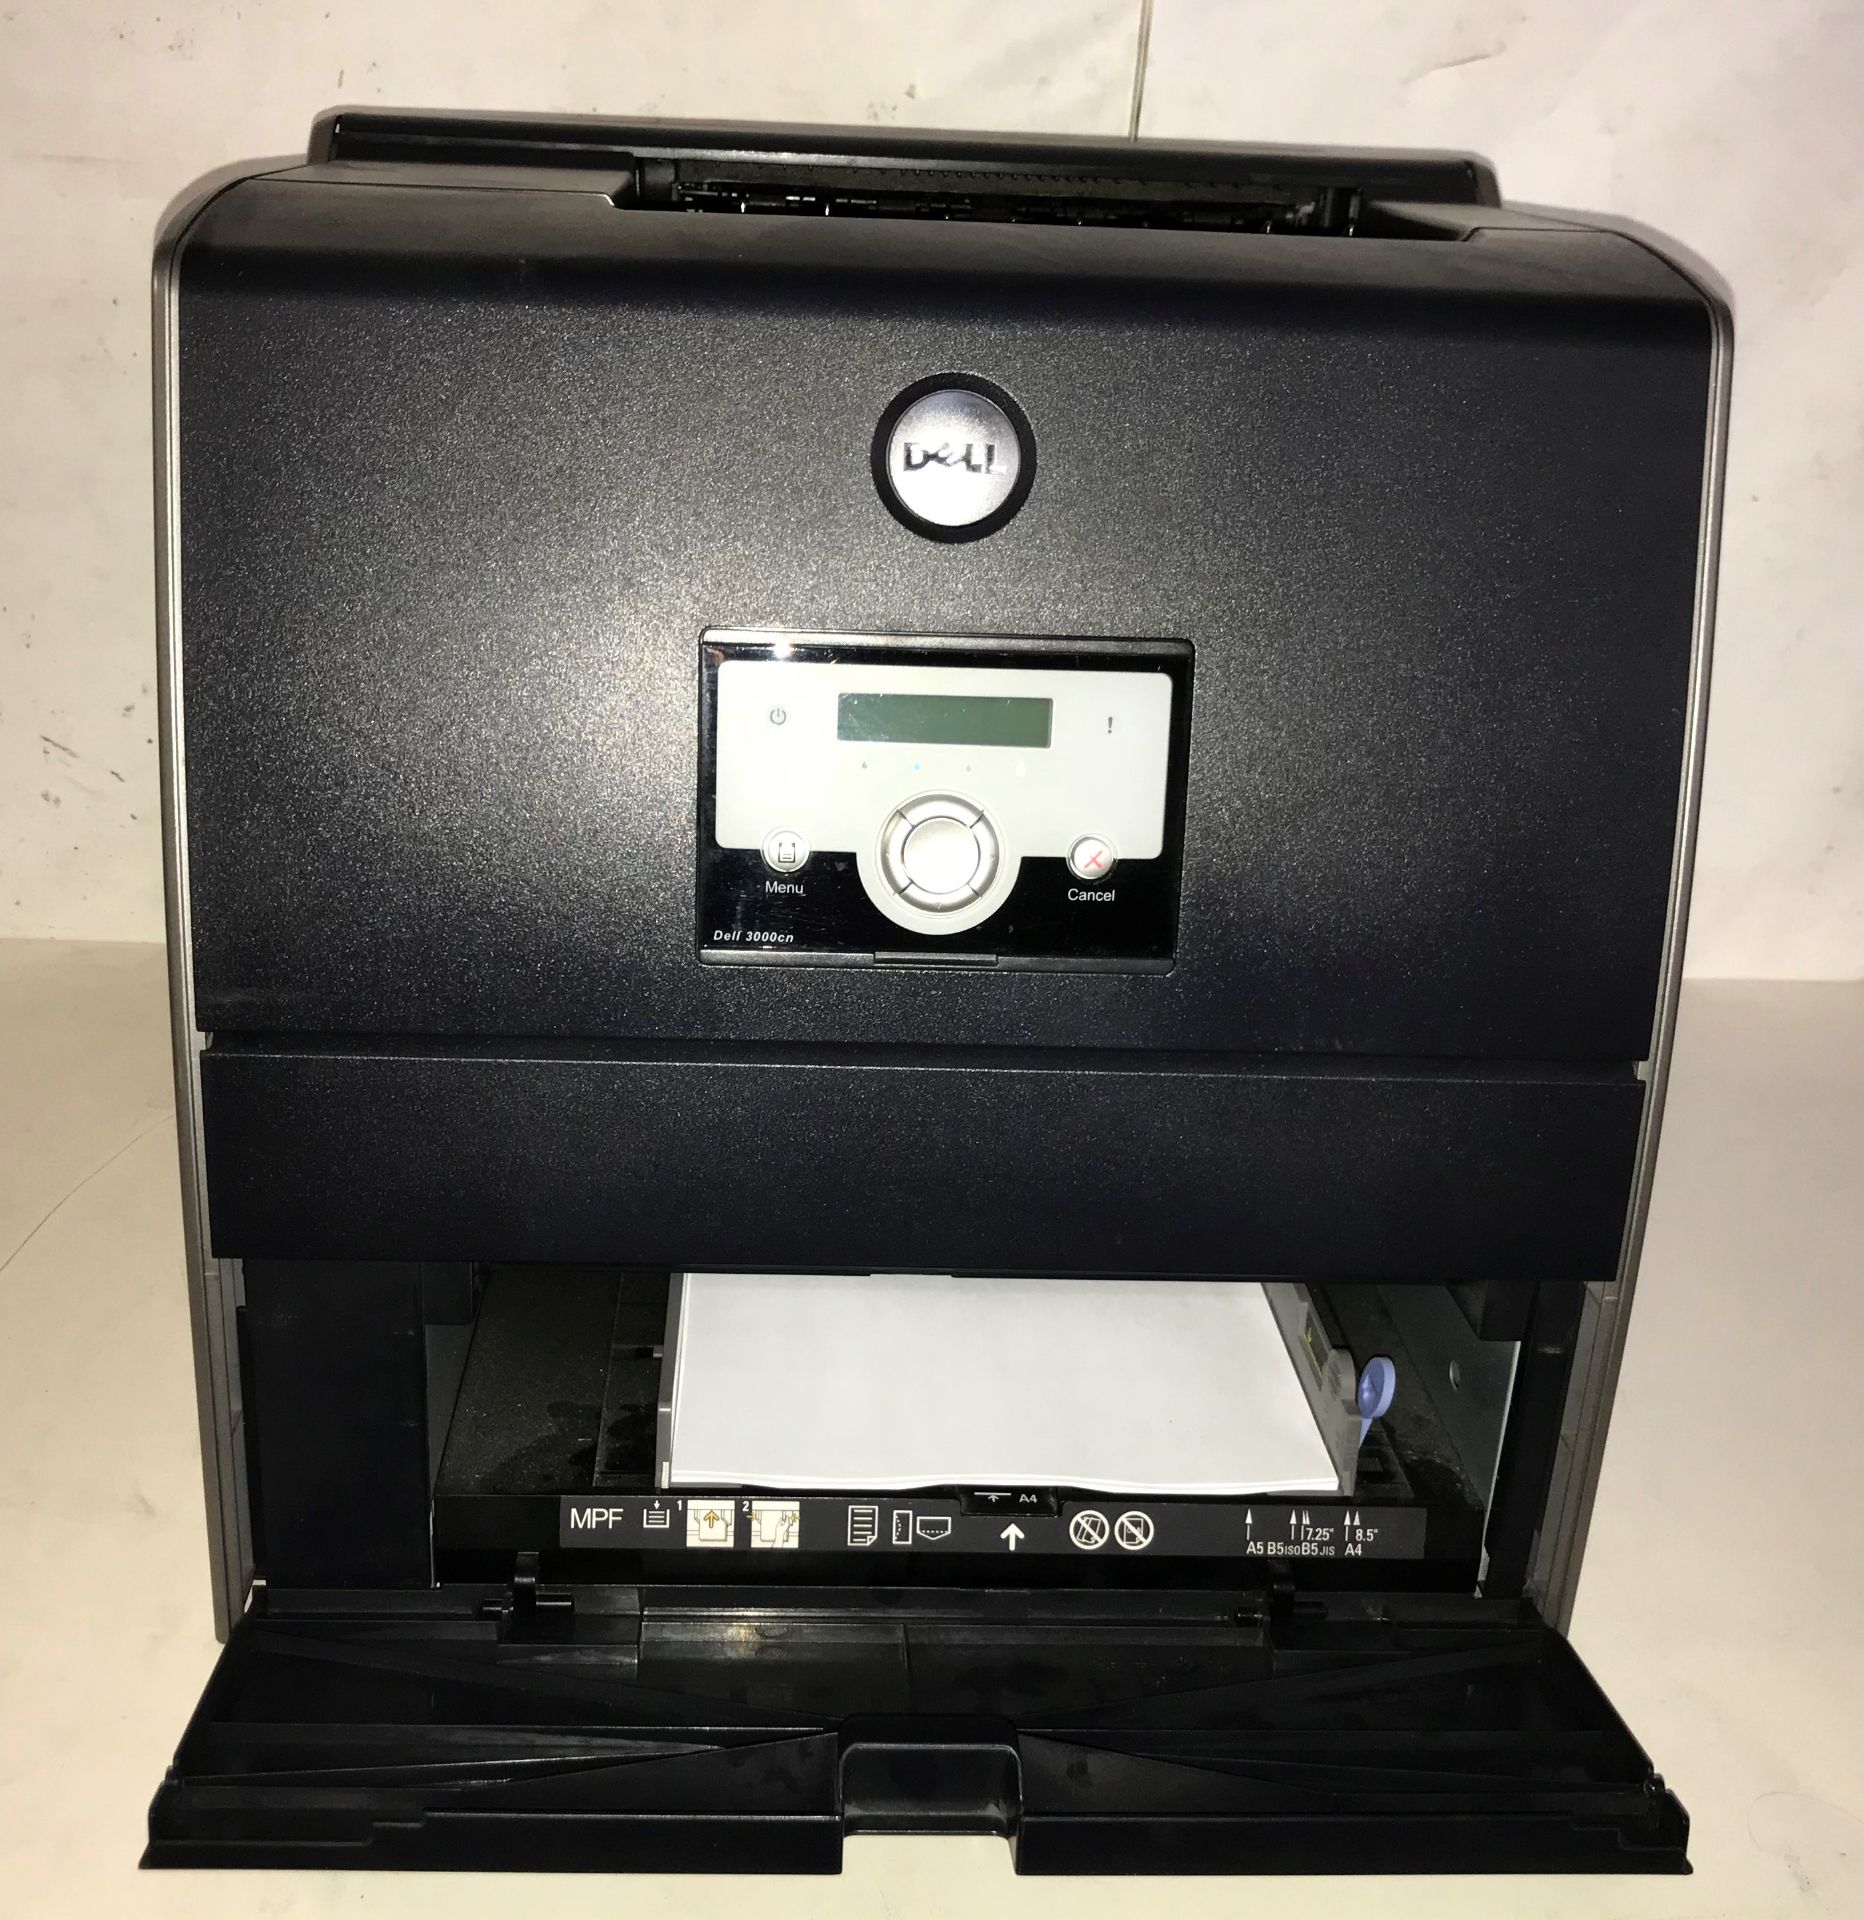 Dell 3000cn Colour Laser Printer - Image 4 of 6